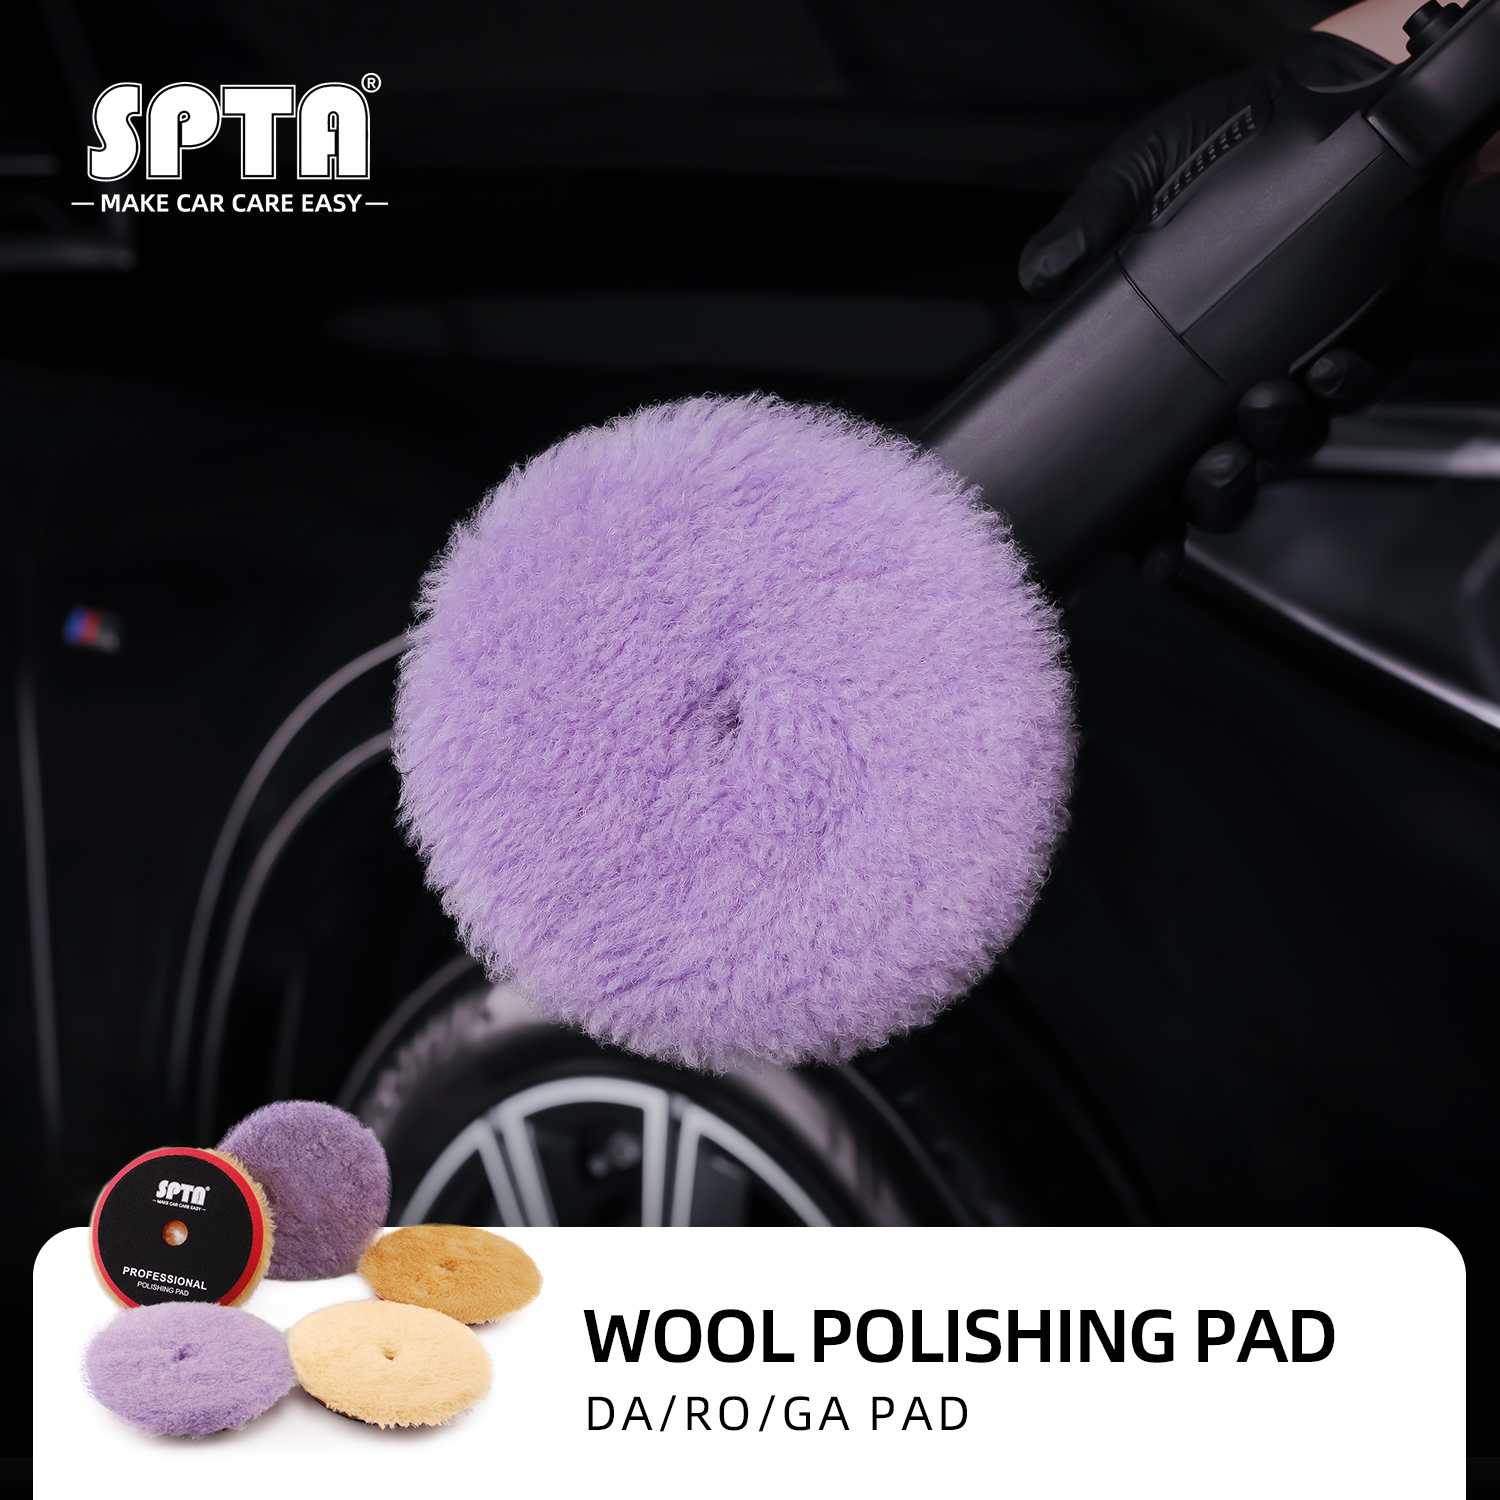 SPTA 356 DA/RO Purple Wool Polishing Pad 100% Wool Buffing Pad for Car  Detailing,Wool Polishing Pad